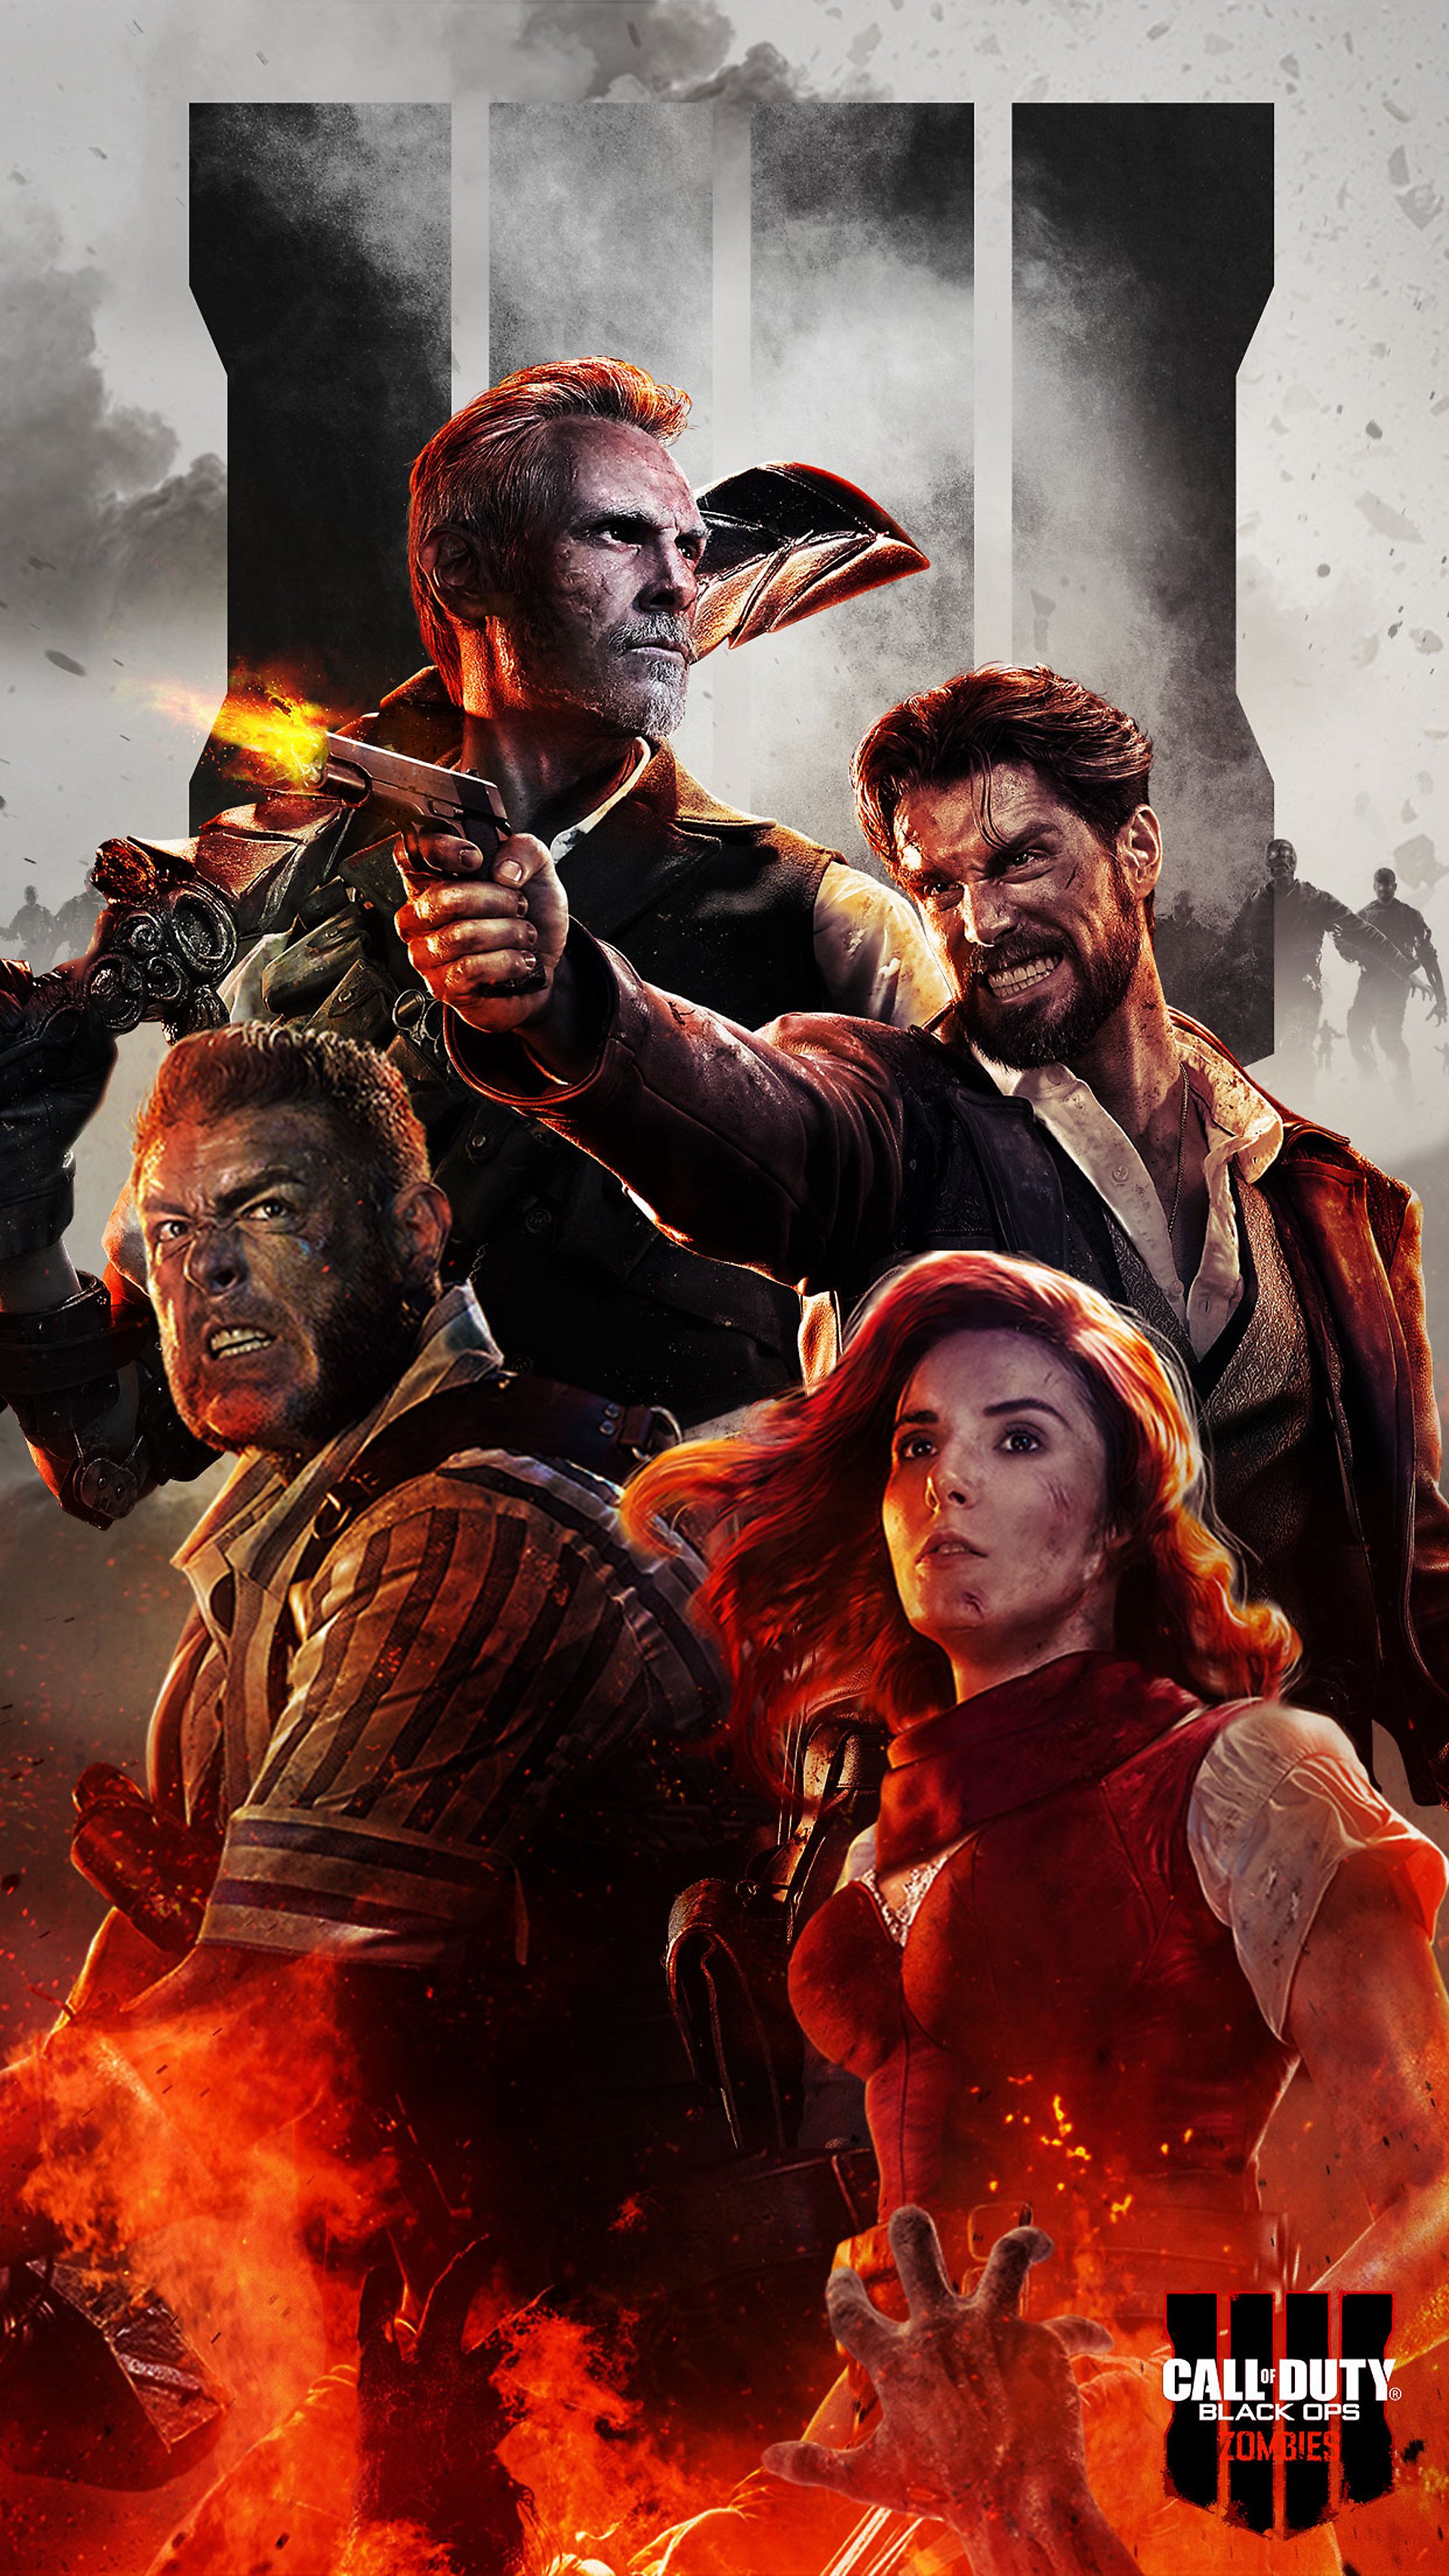 33+] Call Of Duty: Black Ops 4 Zombies Wallpapers - WallpaperSafari